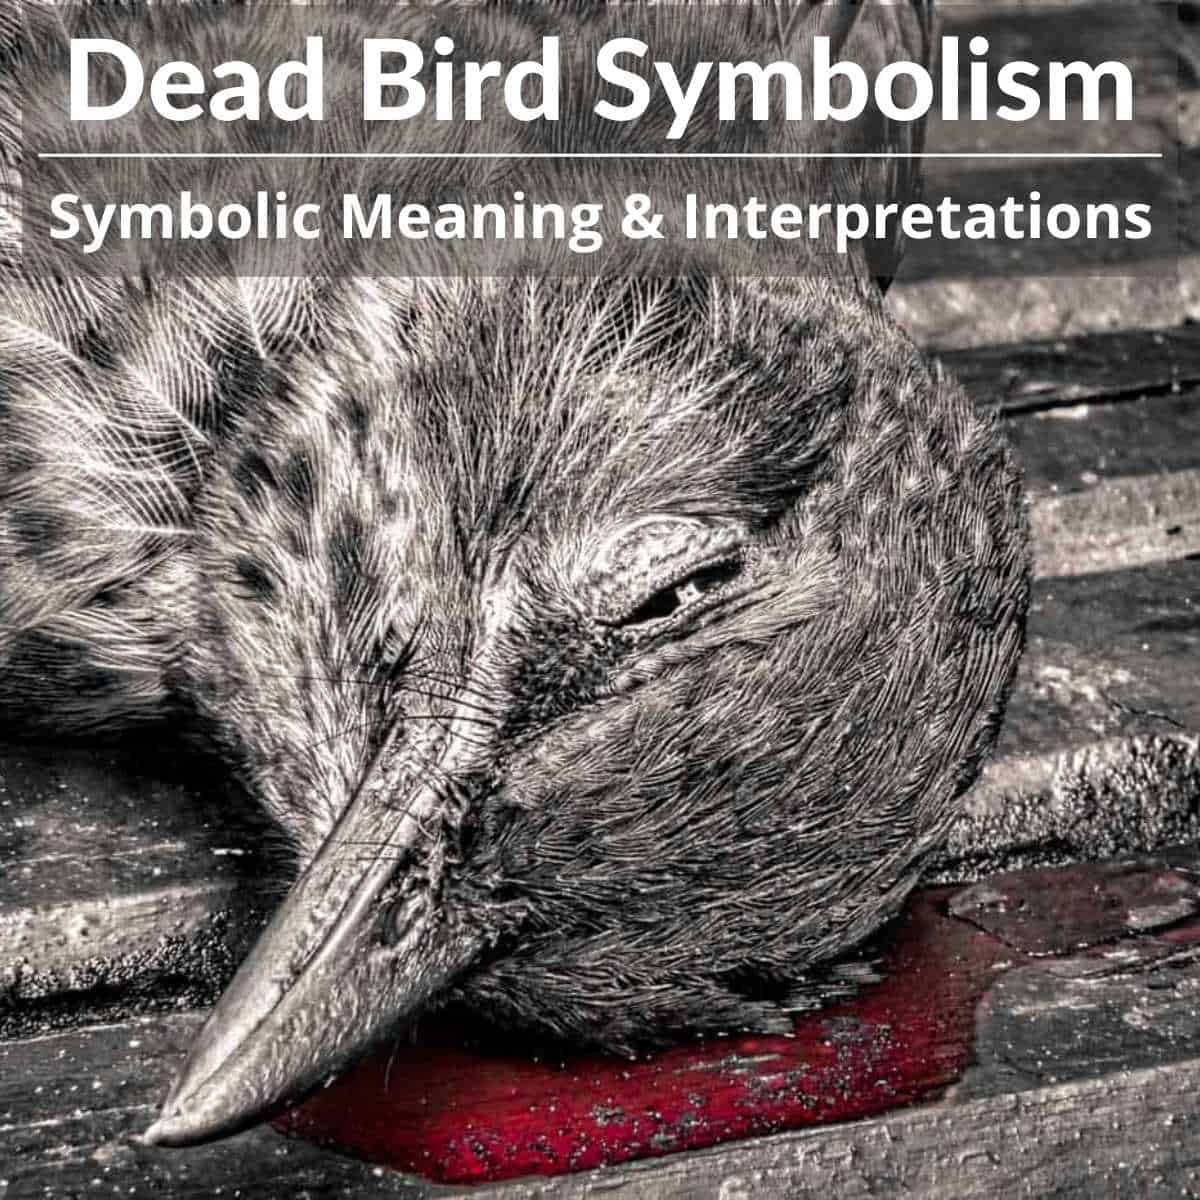 Dead bird symbolism